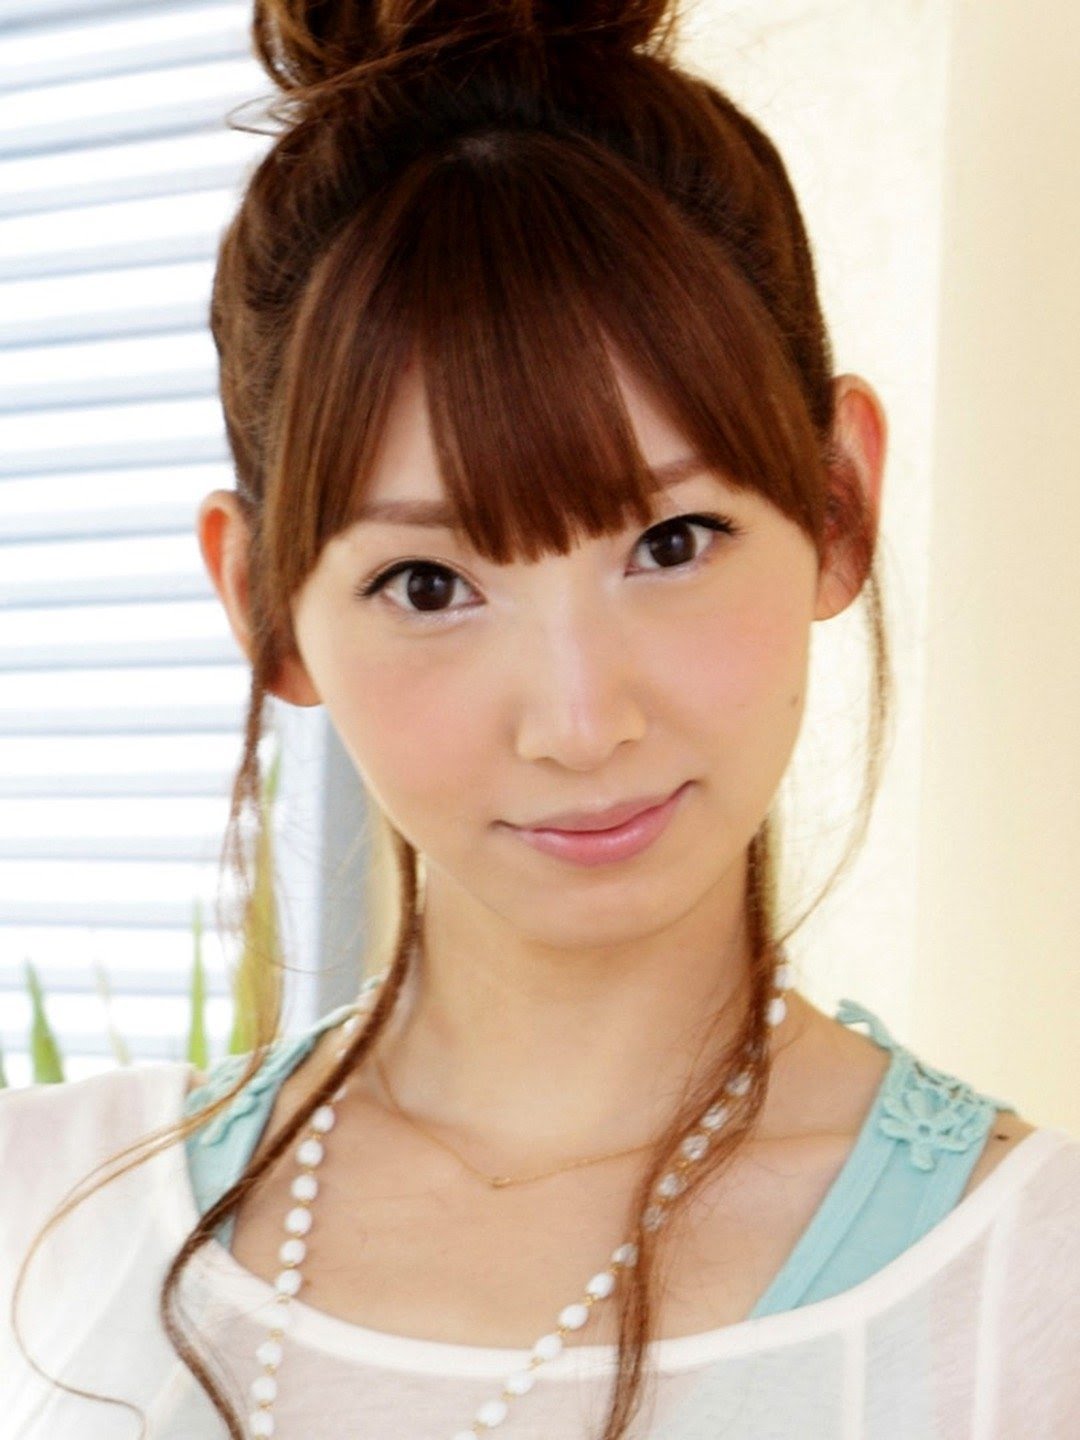 Marina Inoue Japanese Voice Actress, Singer